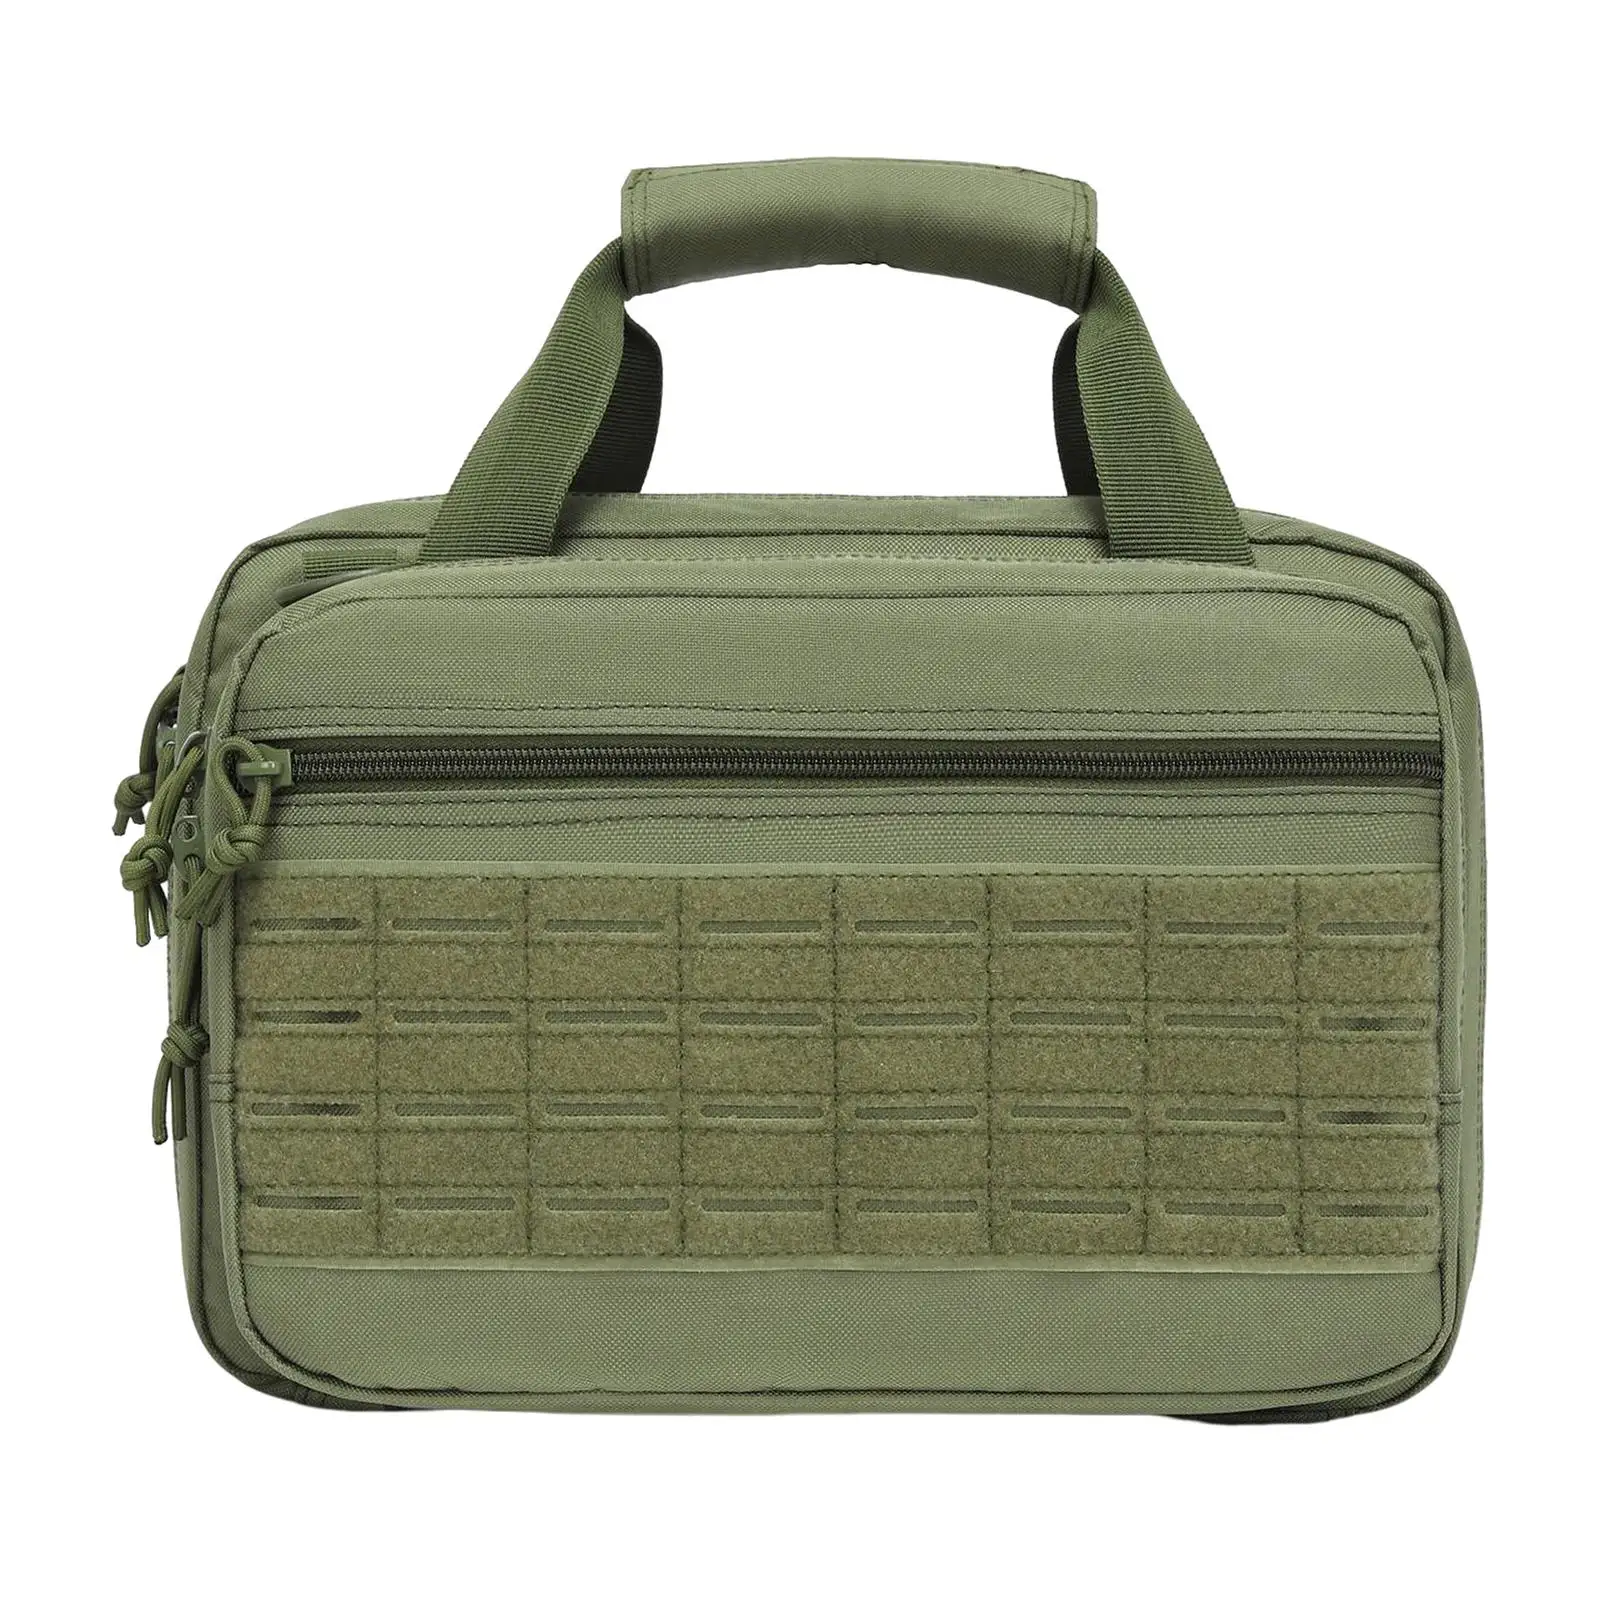 Multifunctional Tool Storage Bag Foldable Picnic Bag Camping Gear Reusable